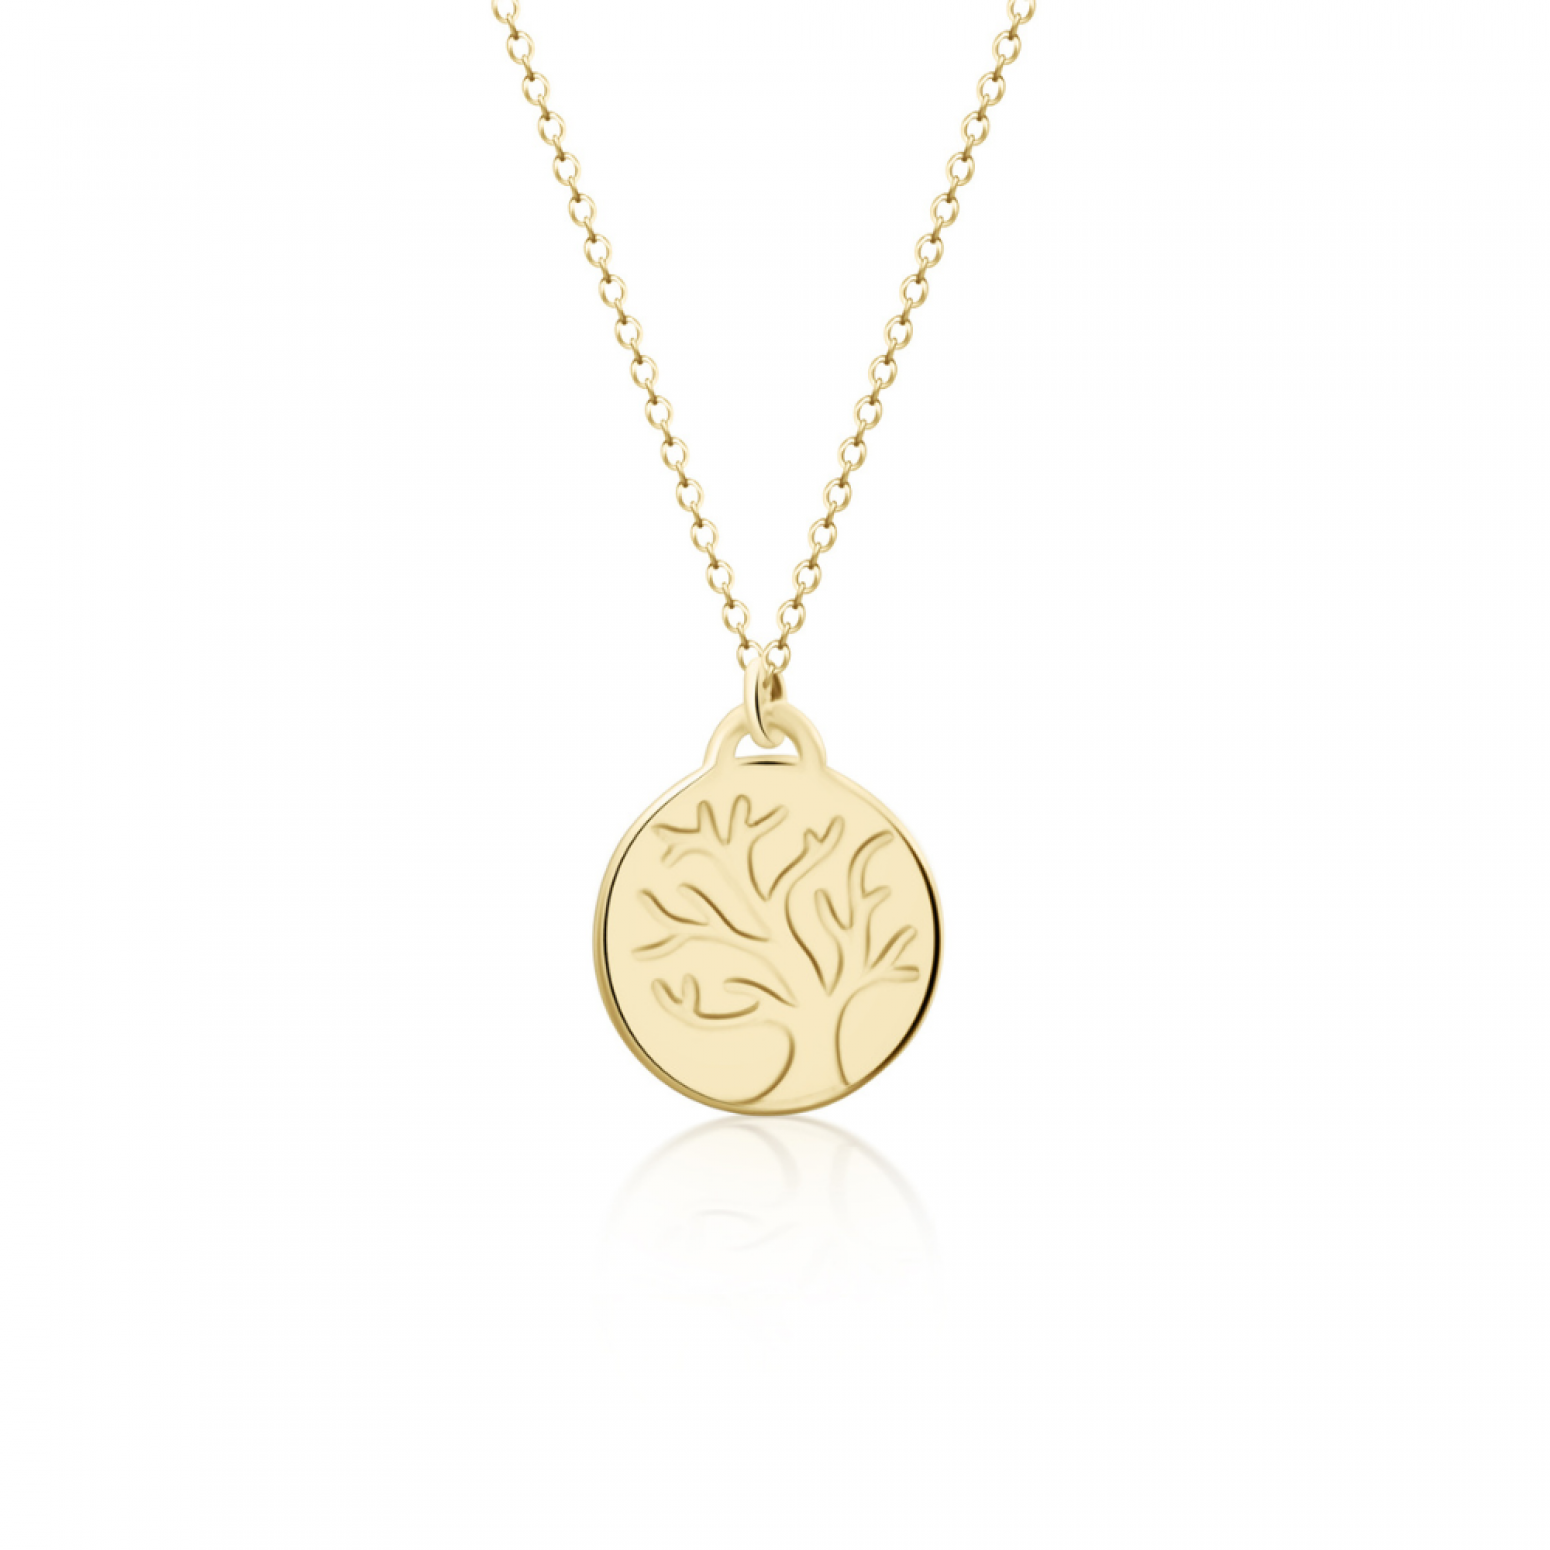 Round necklace, Κ14 gold with the tree of life, ko4982 NECKLACES Κοσμηματα - chrilia.gr